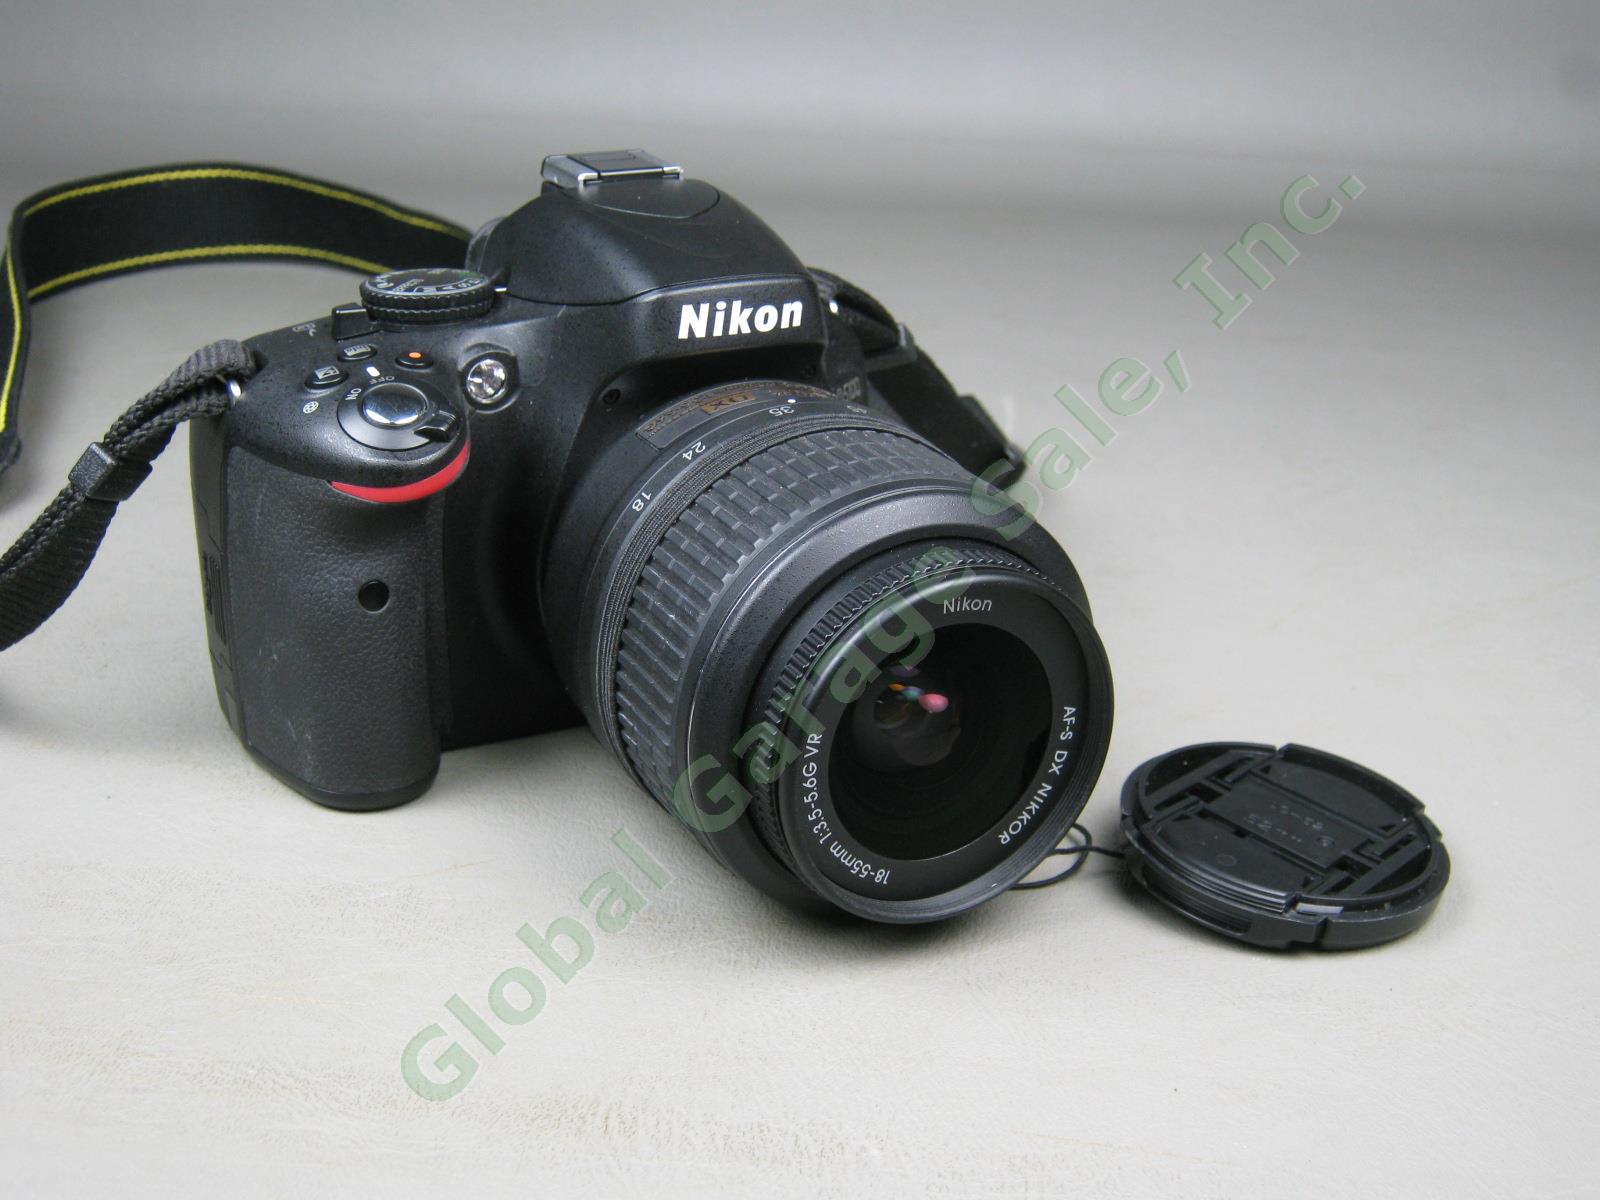 Nikon D5100 DSLR DX 18-55 VR Digital Camera Kit 2GB Manfrotto Bag Tripod Bundle 1